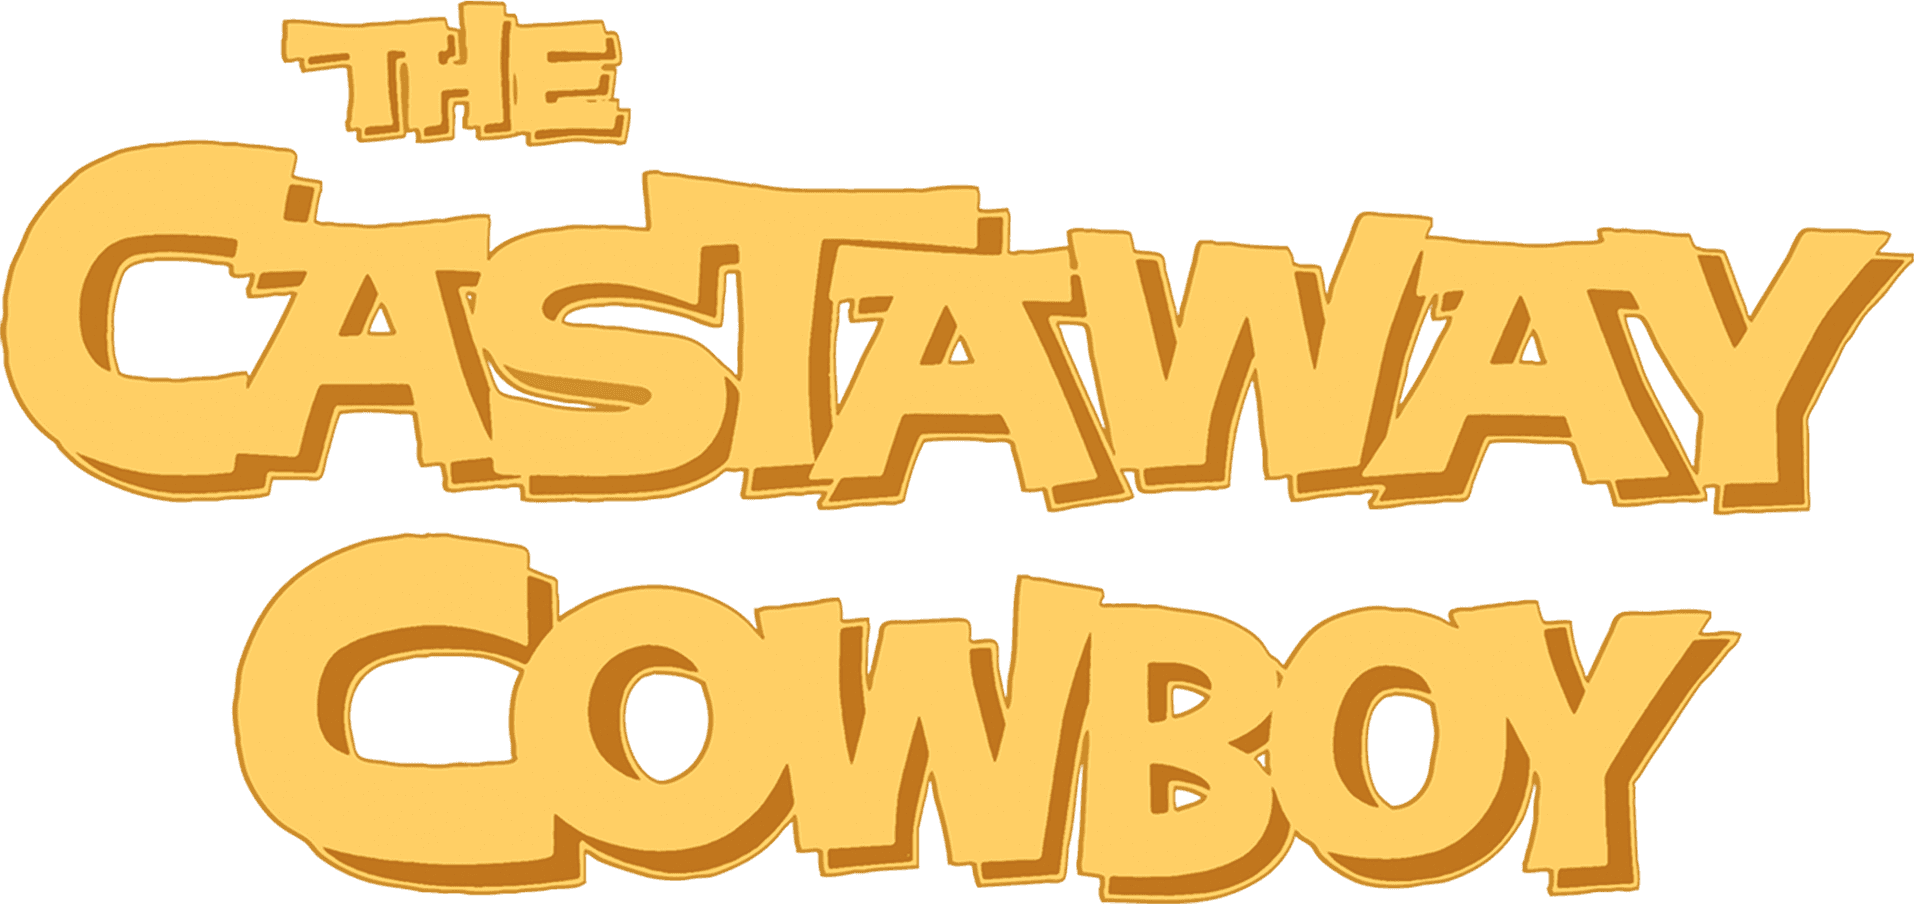 The Castaway Cowboy logo